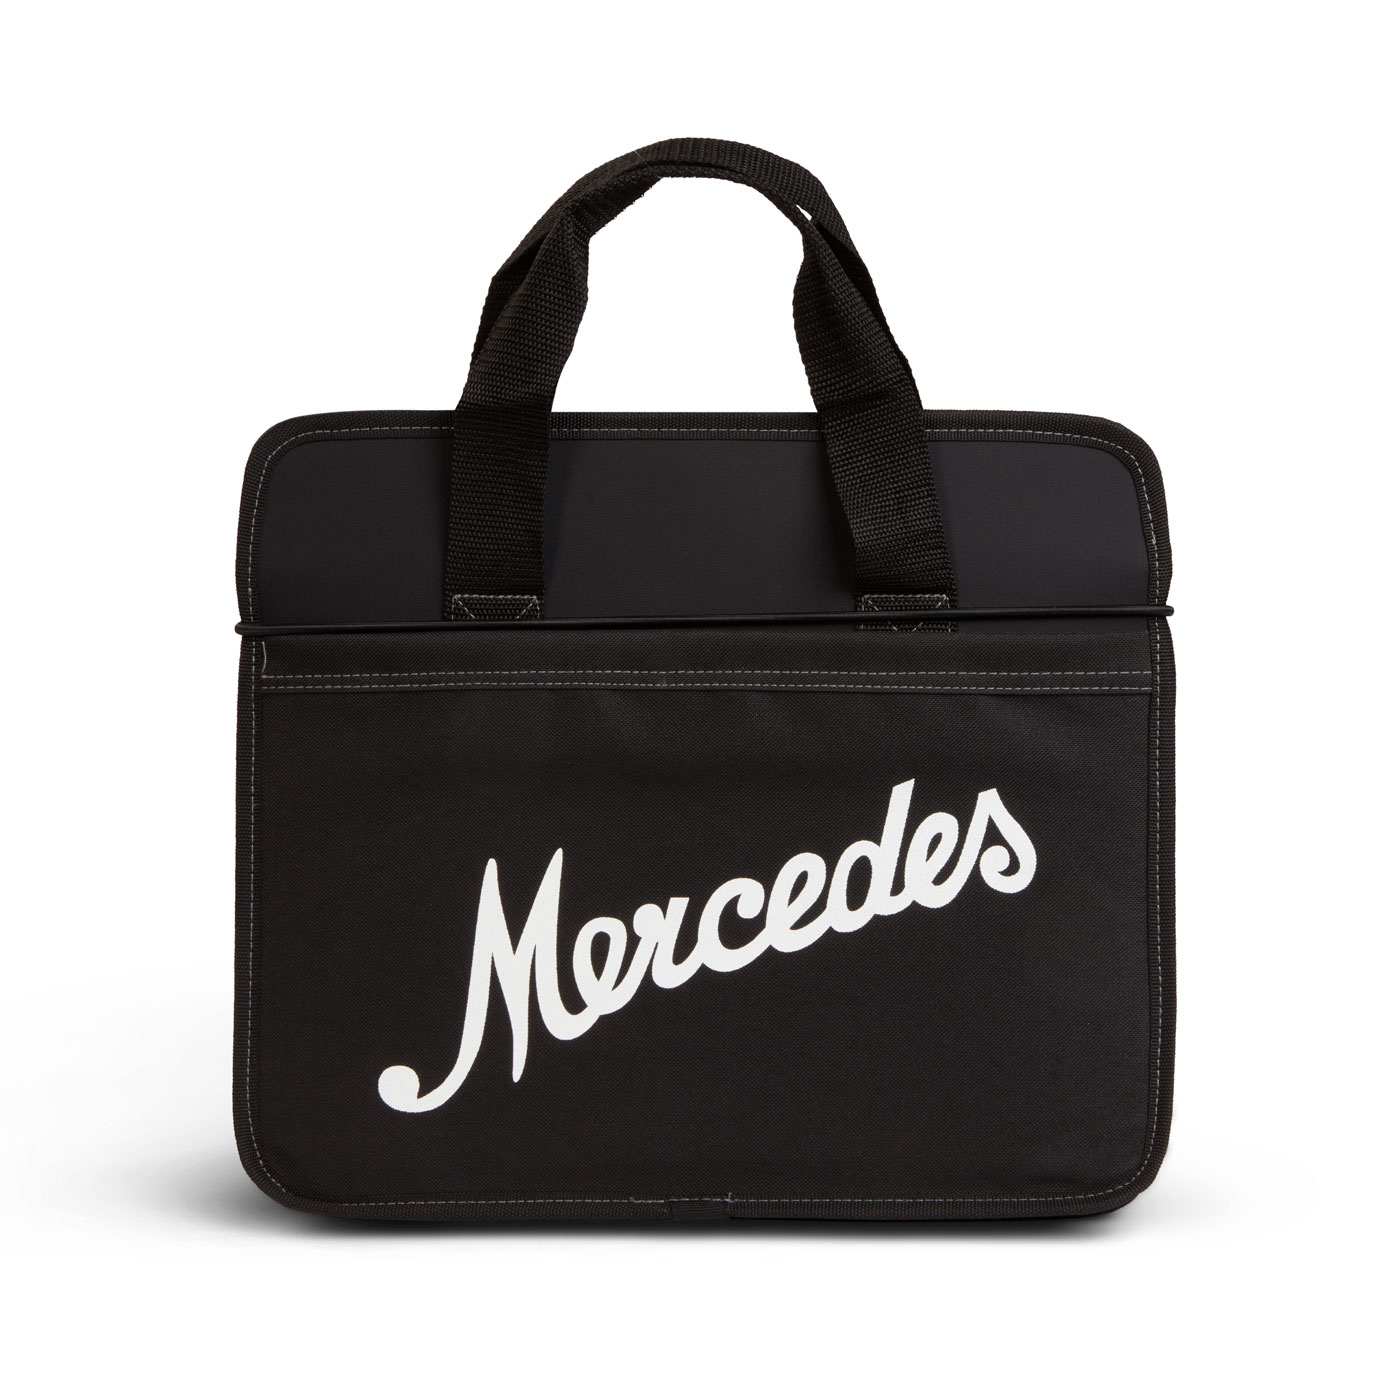 Mercedes-Benz Weekend Bag, Black : : Fashion